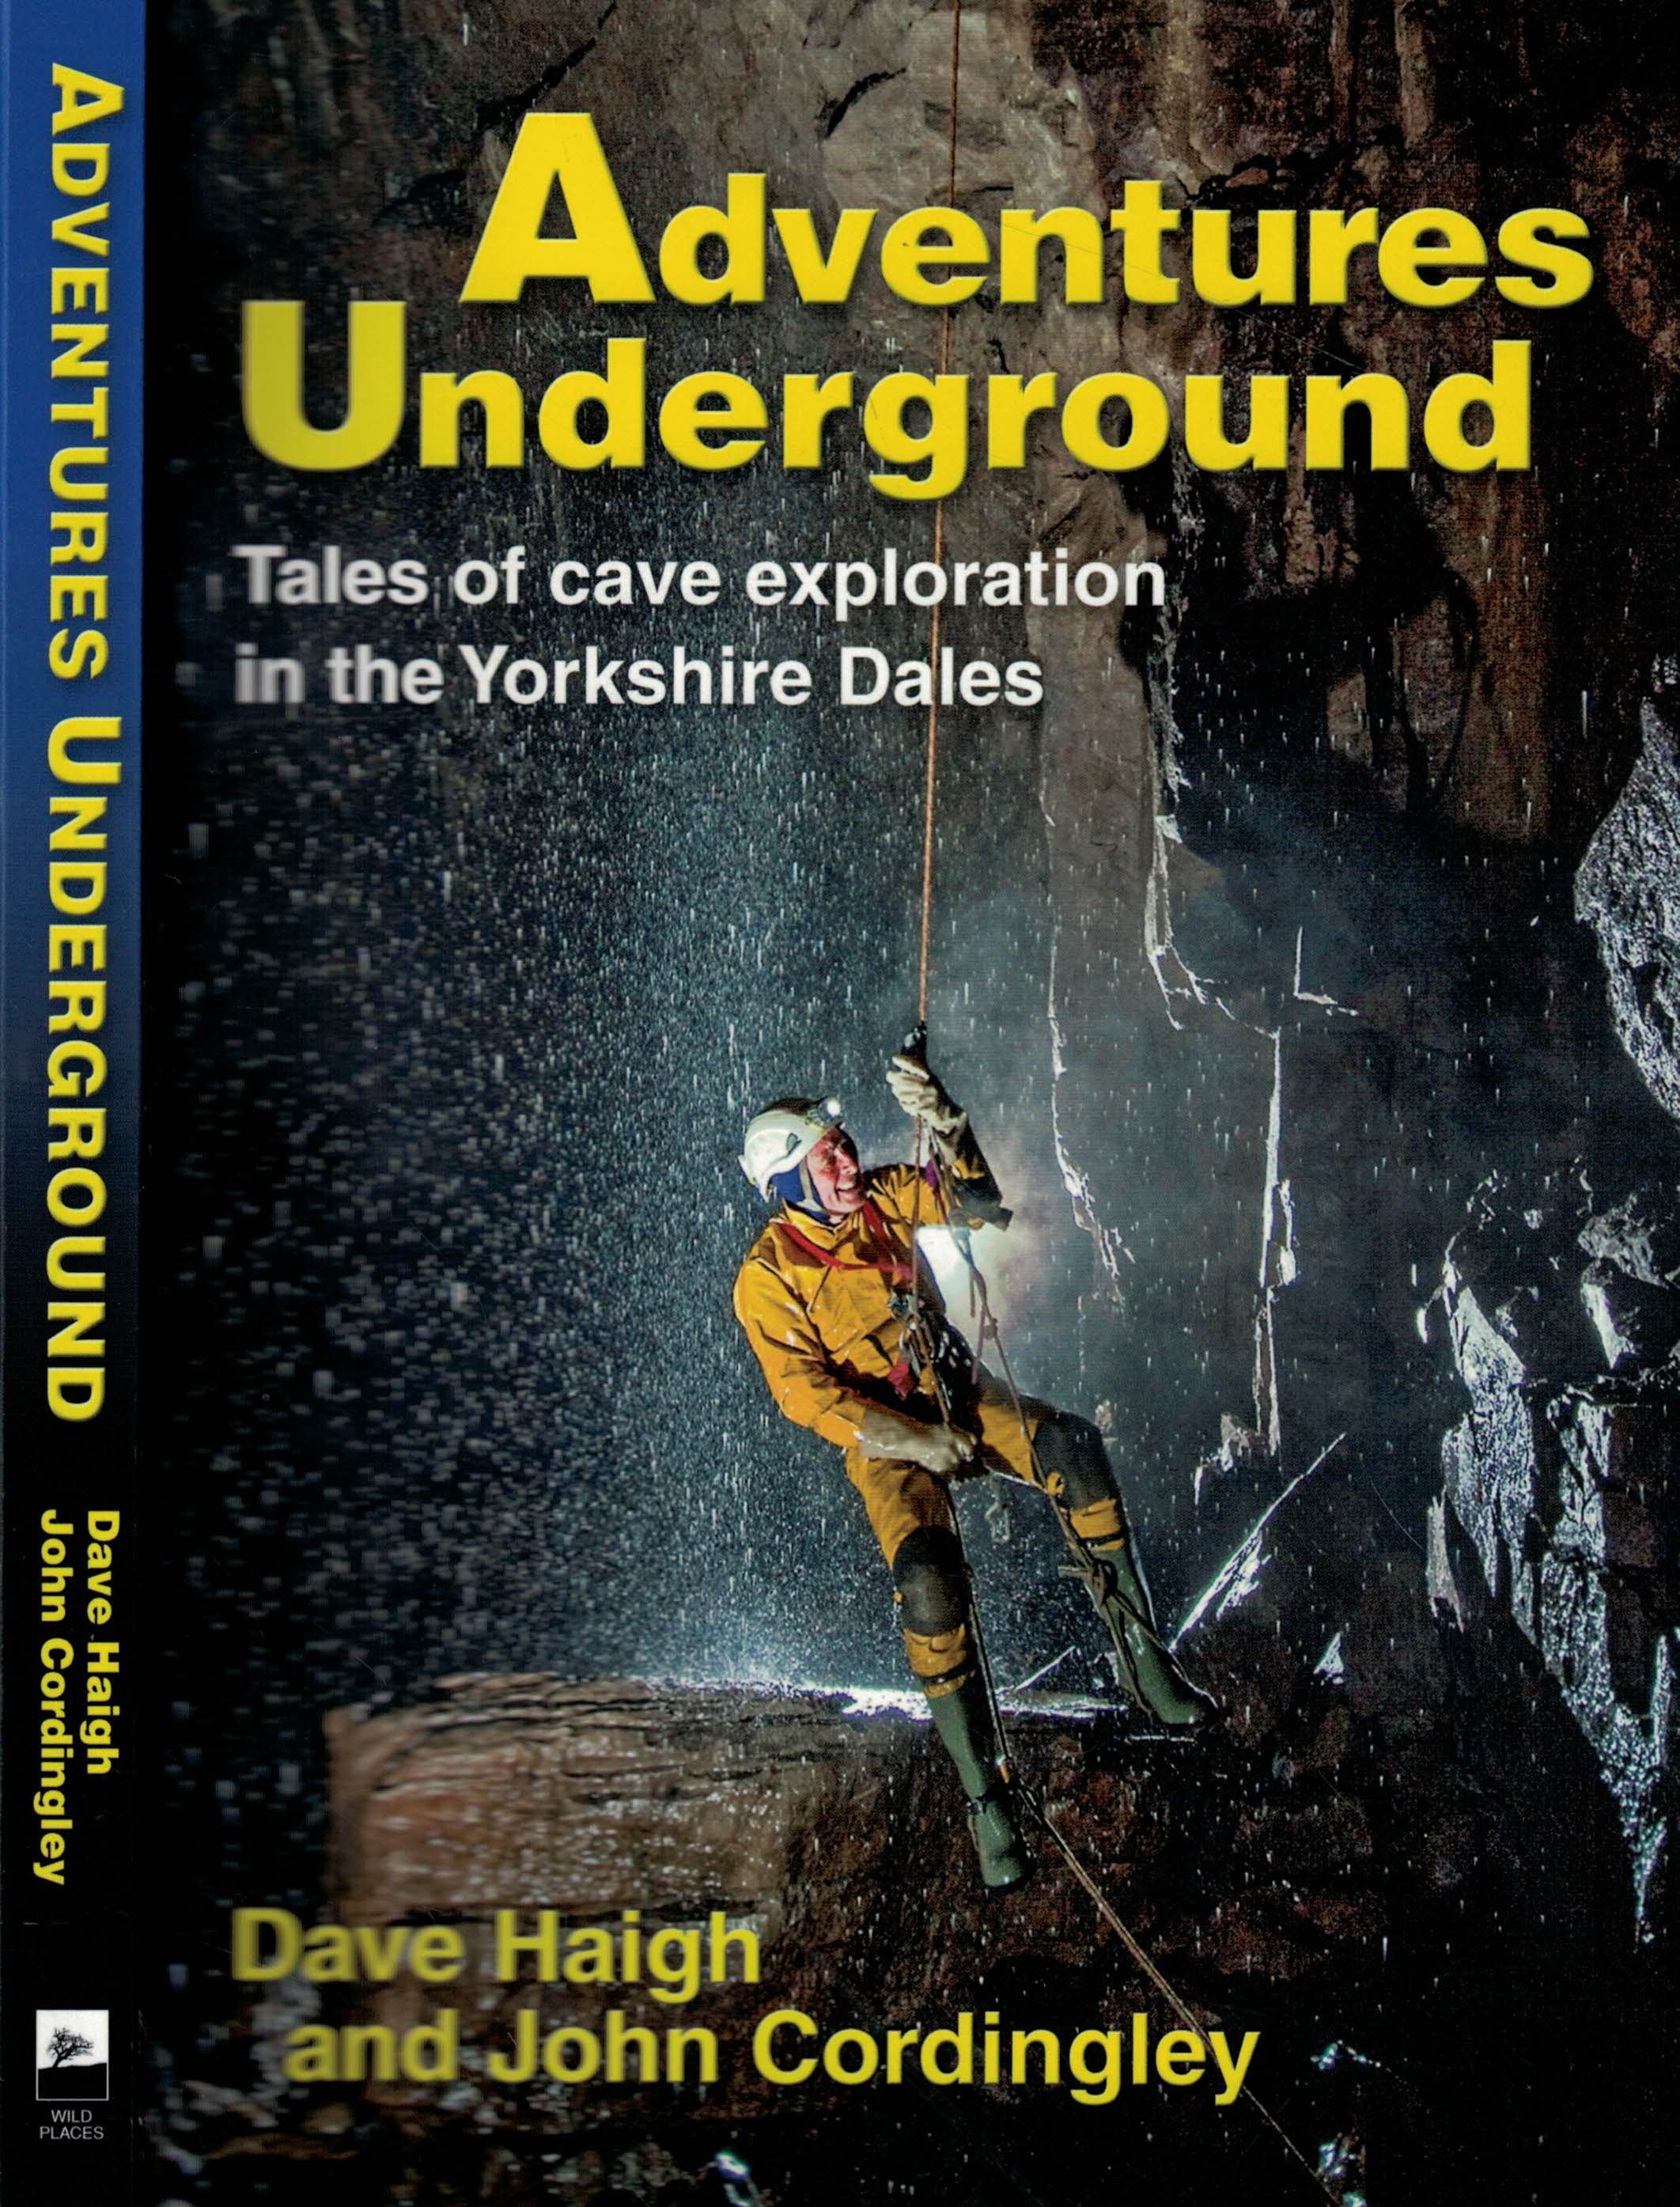 Adventures Underground. Signed copy.